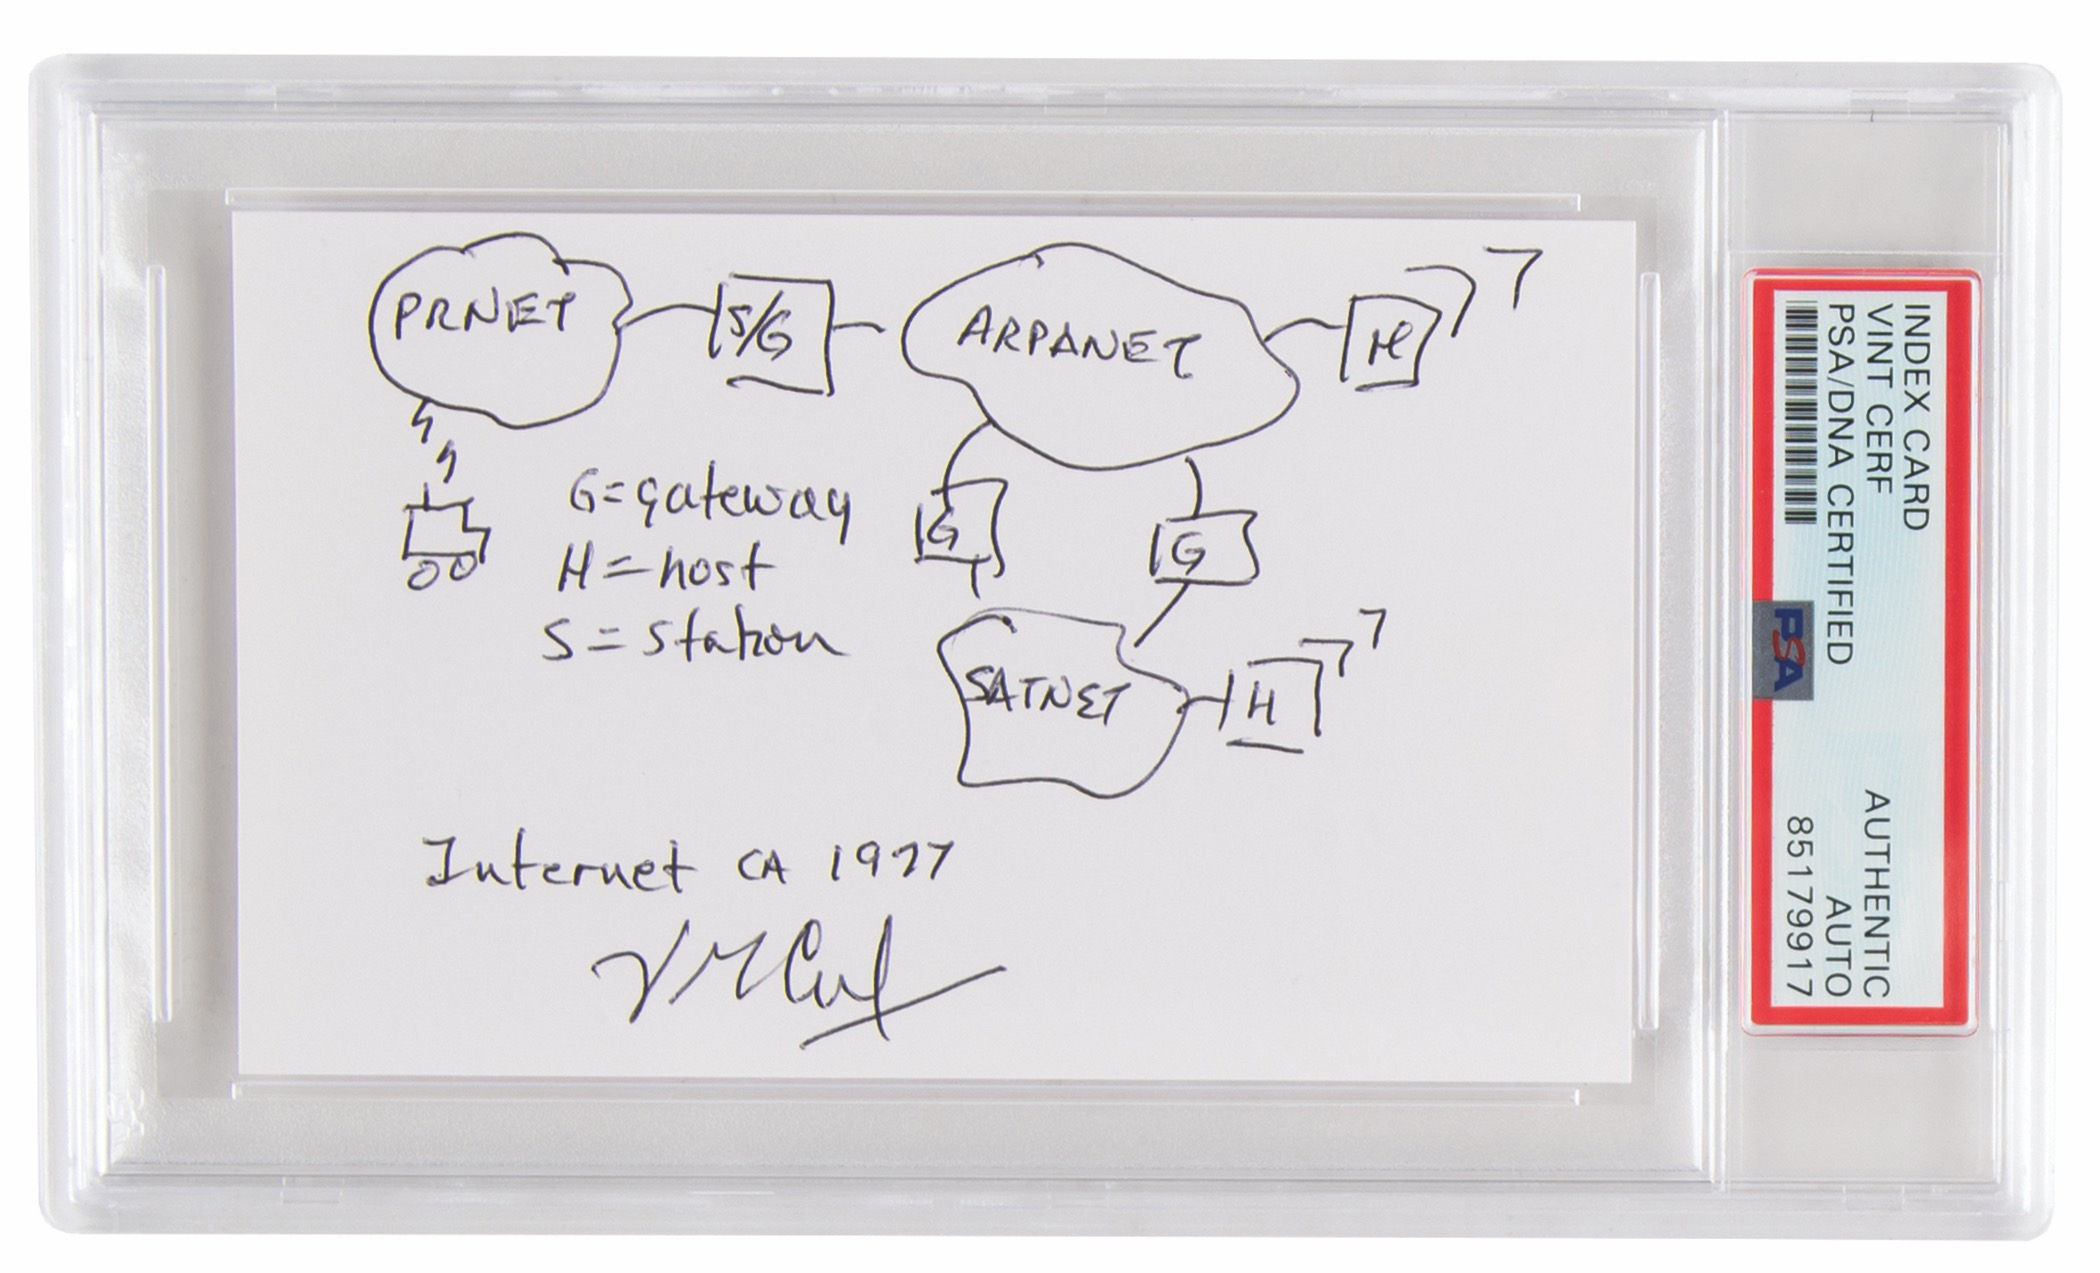 Lot #261 Vint Cerf Original Sketch of 'Internet ca